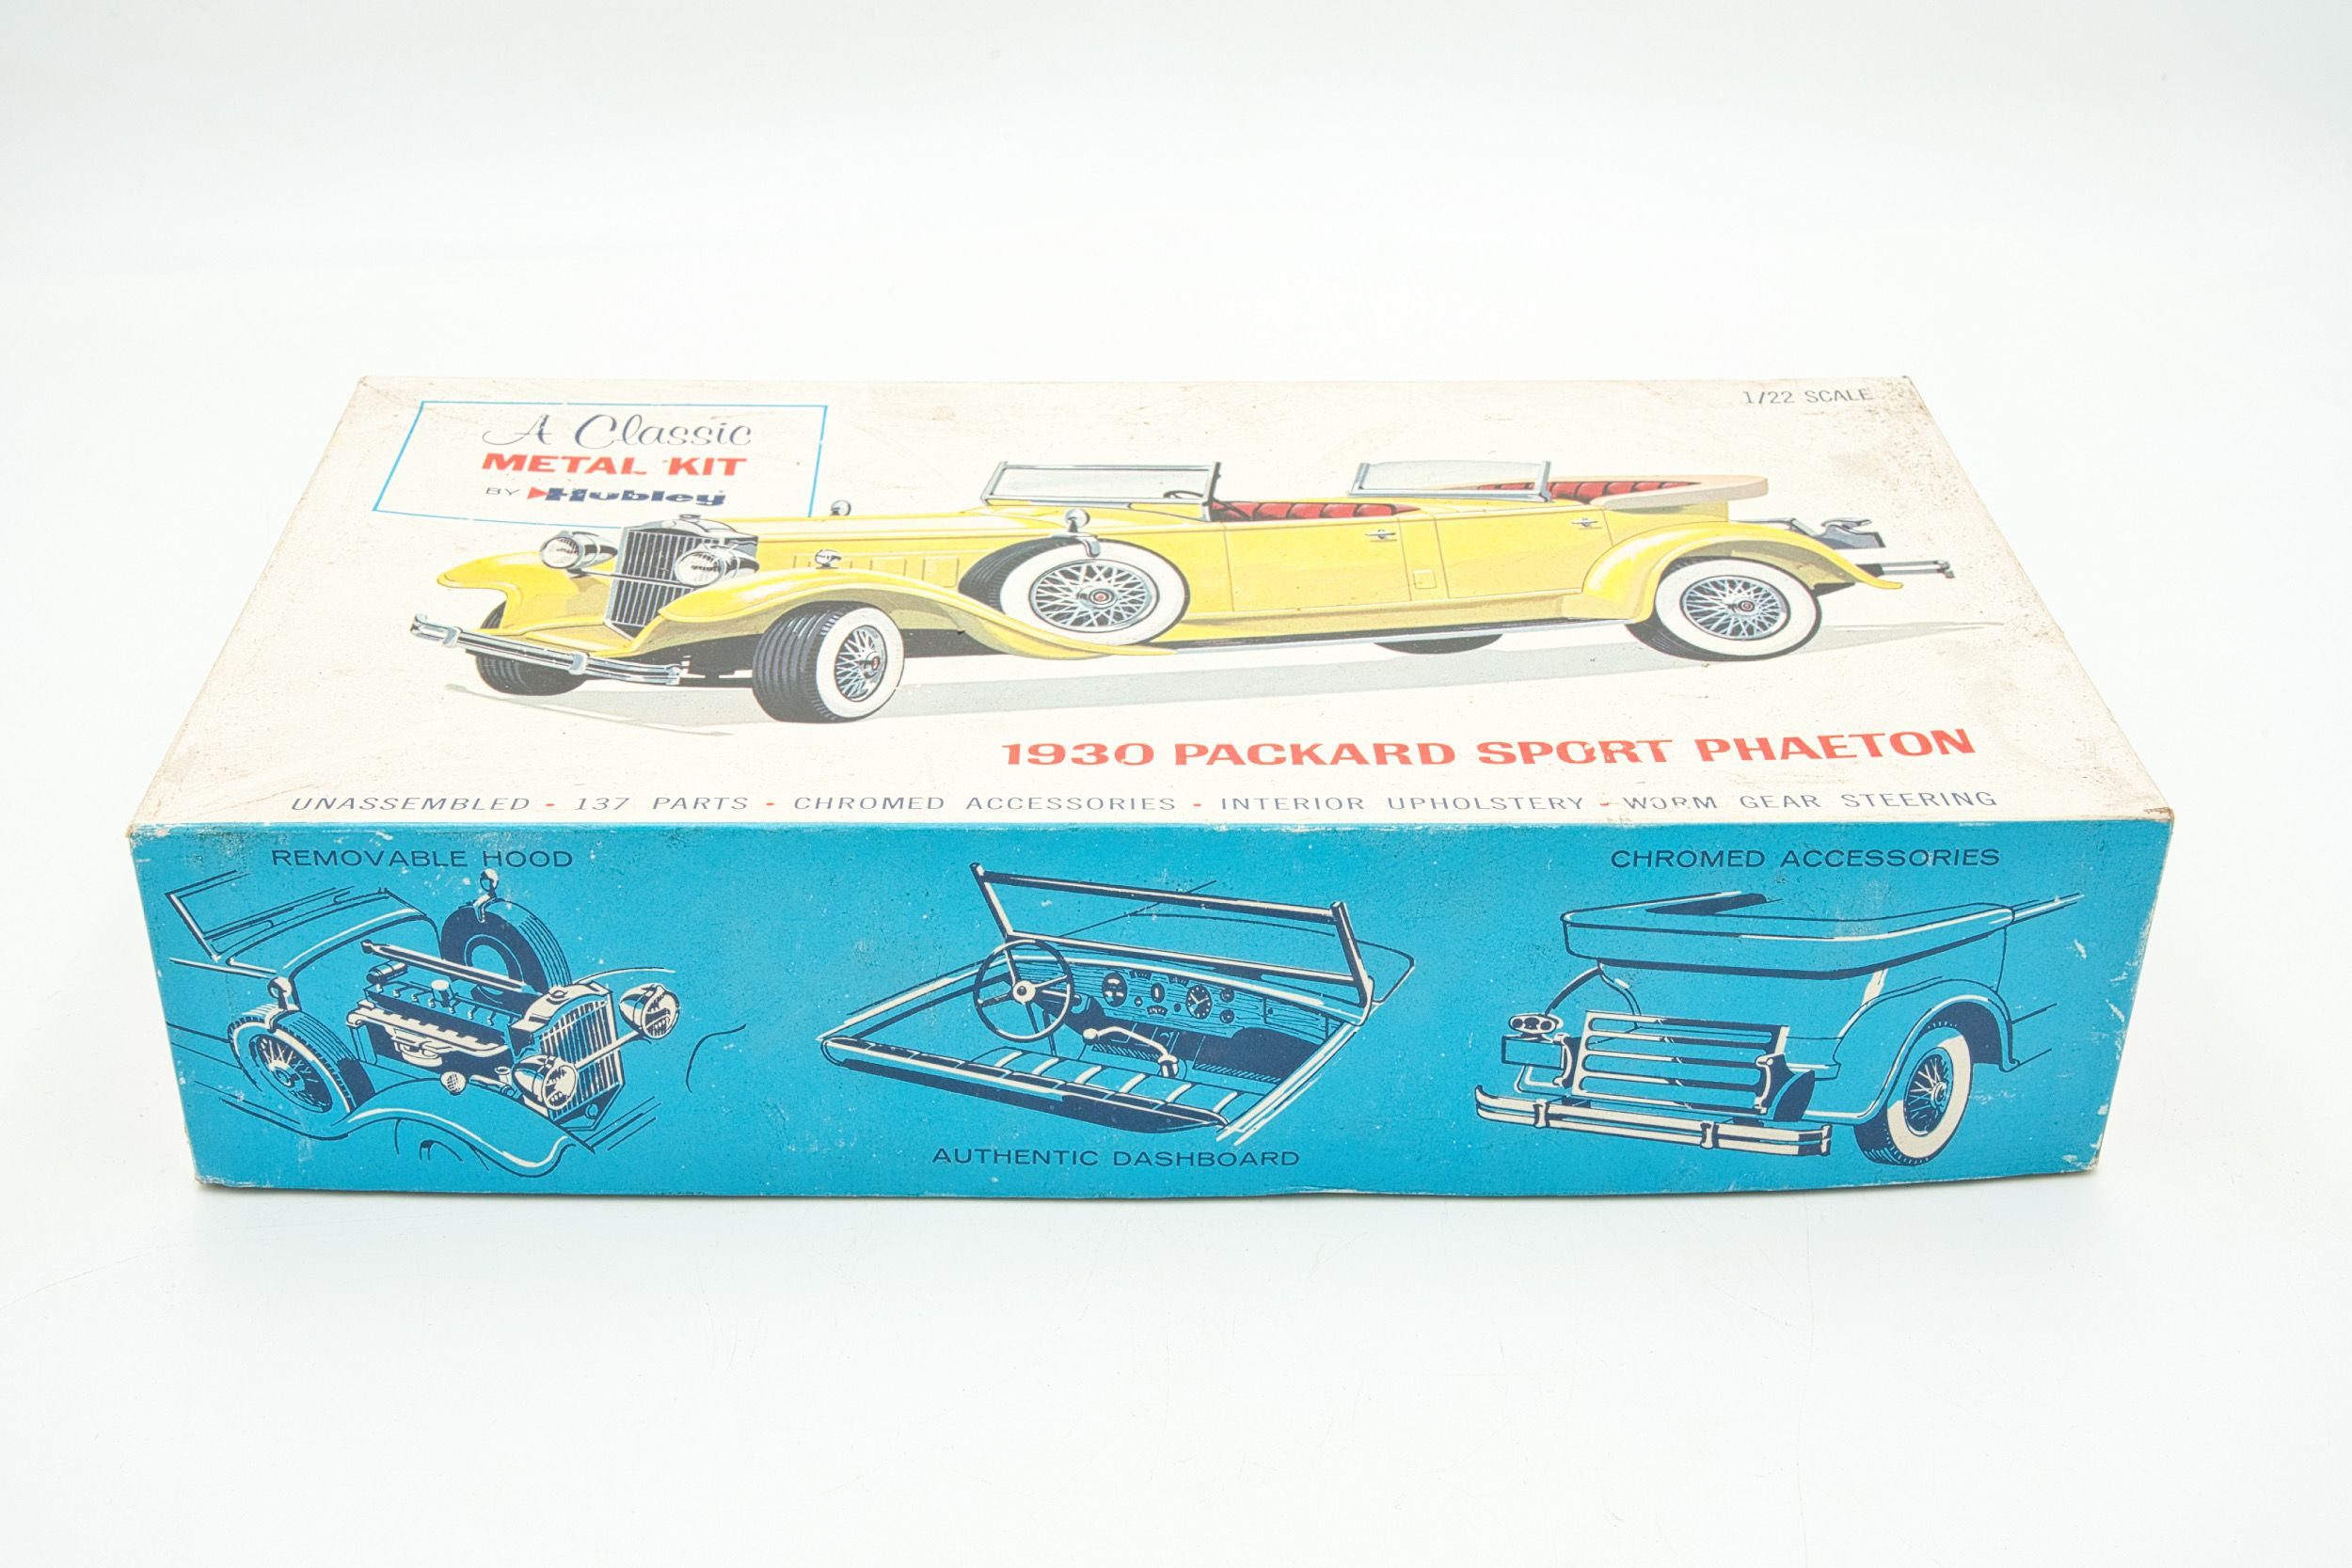 Kit Carro Vintage Packard Sport Phaeton 1930 da Hubley